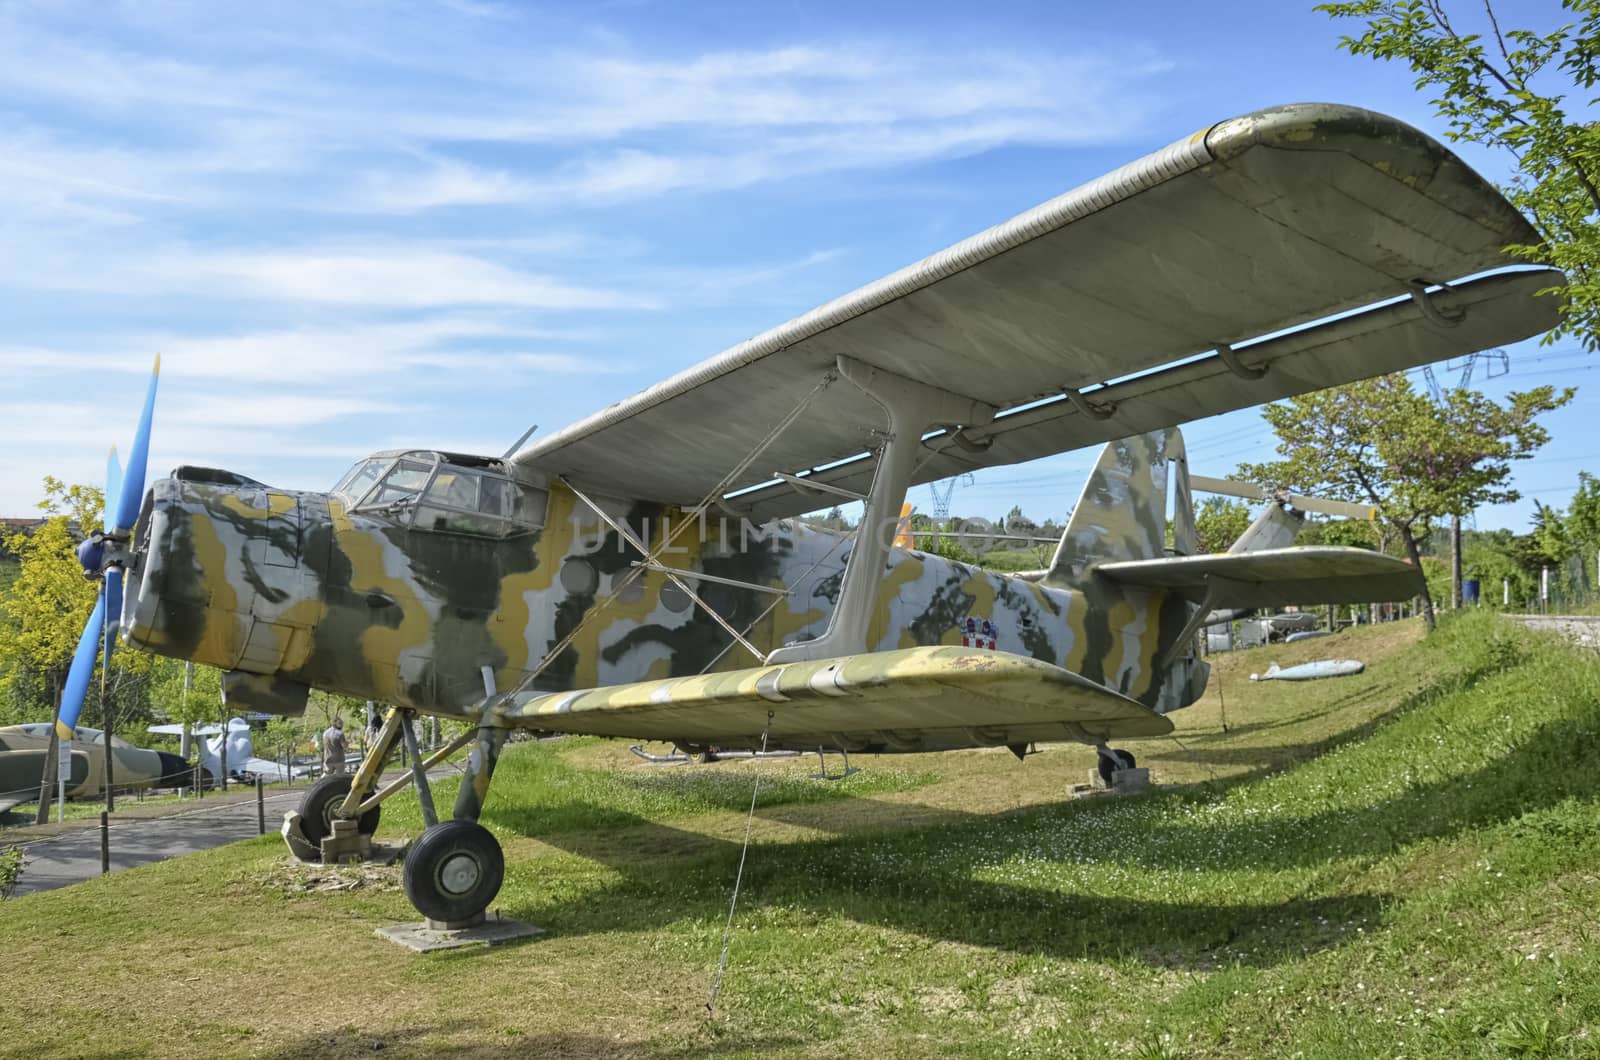 An old Antonov An-2 military aircraft camouflaged